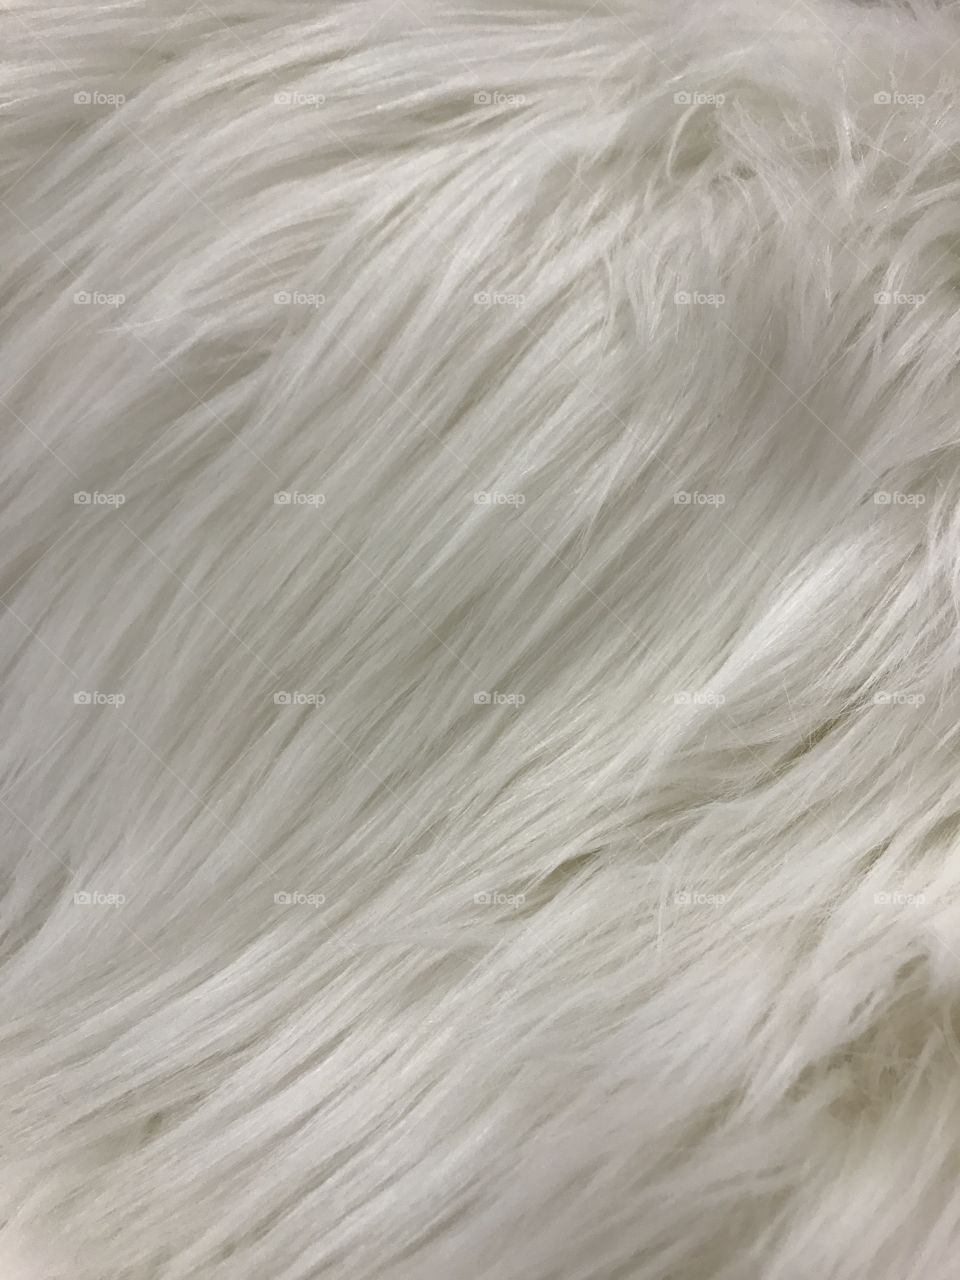 New White faux fur rug